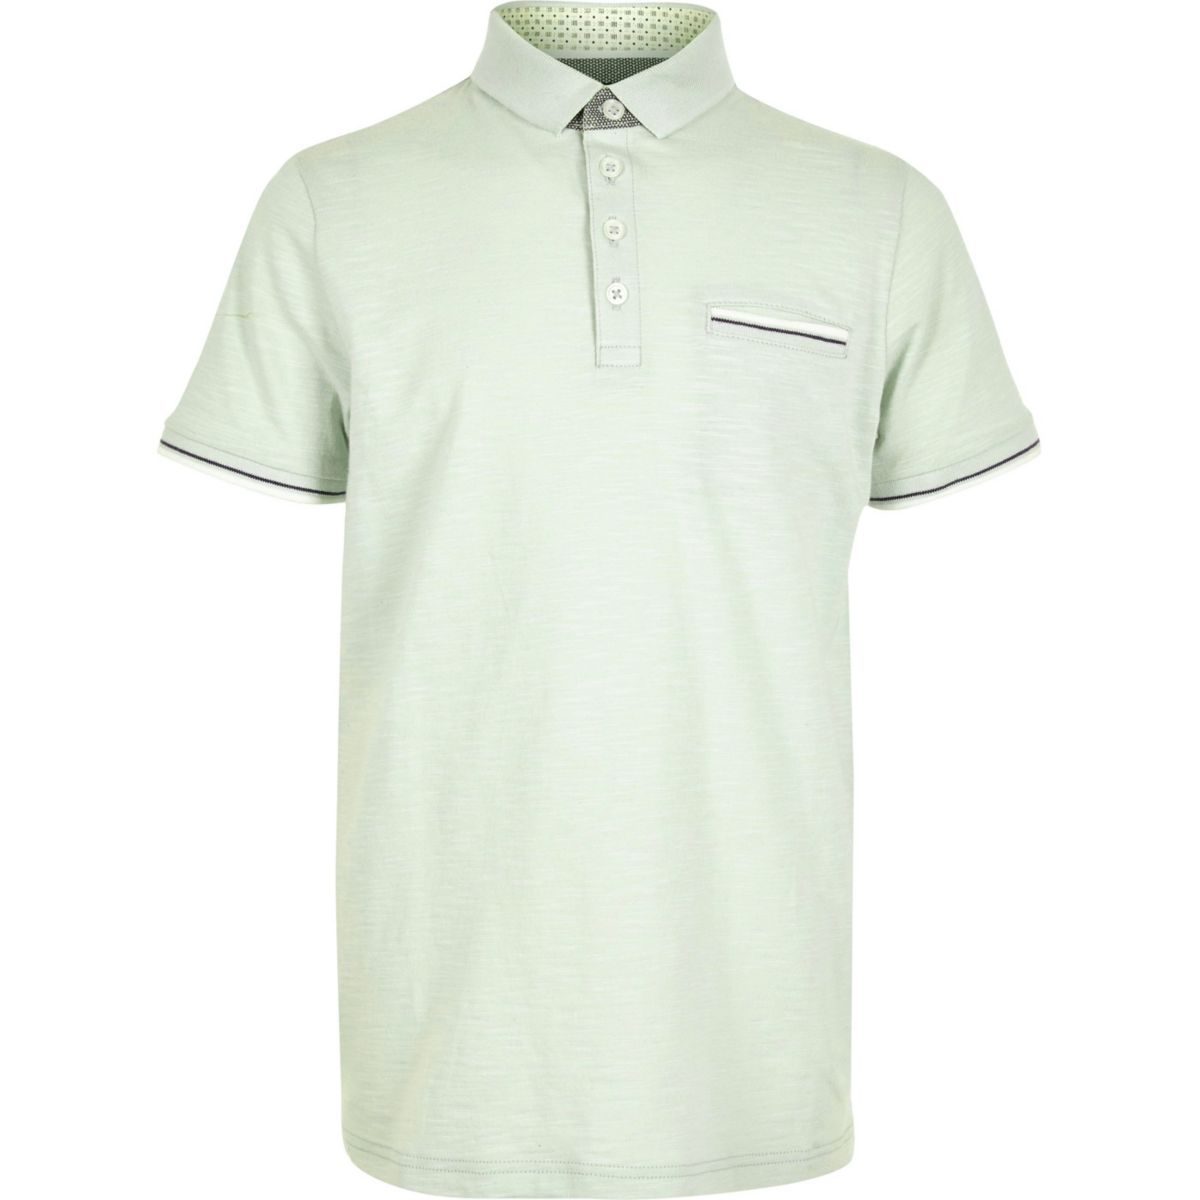 Boys mint green tipped polo shirt - Polo Shirts - Sale - boys